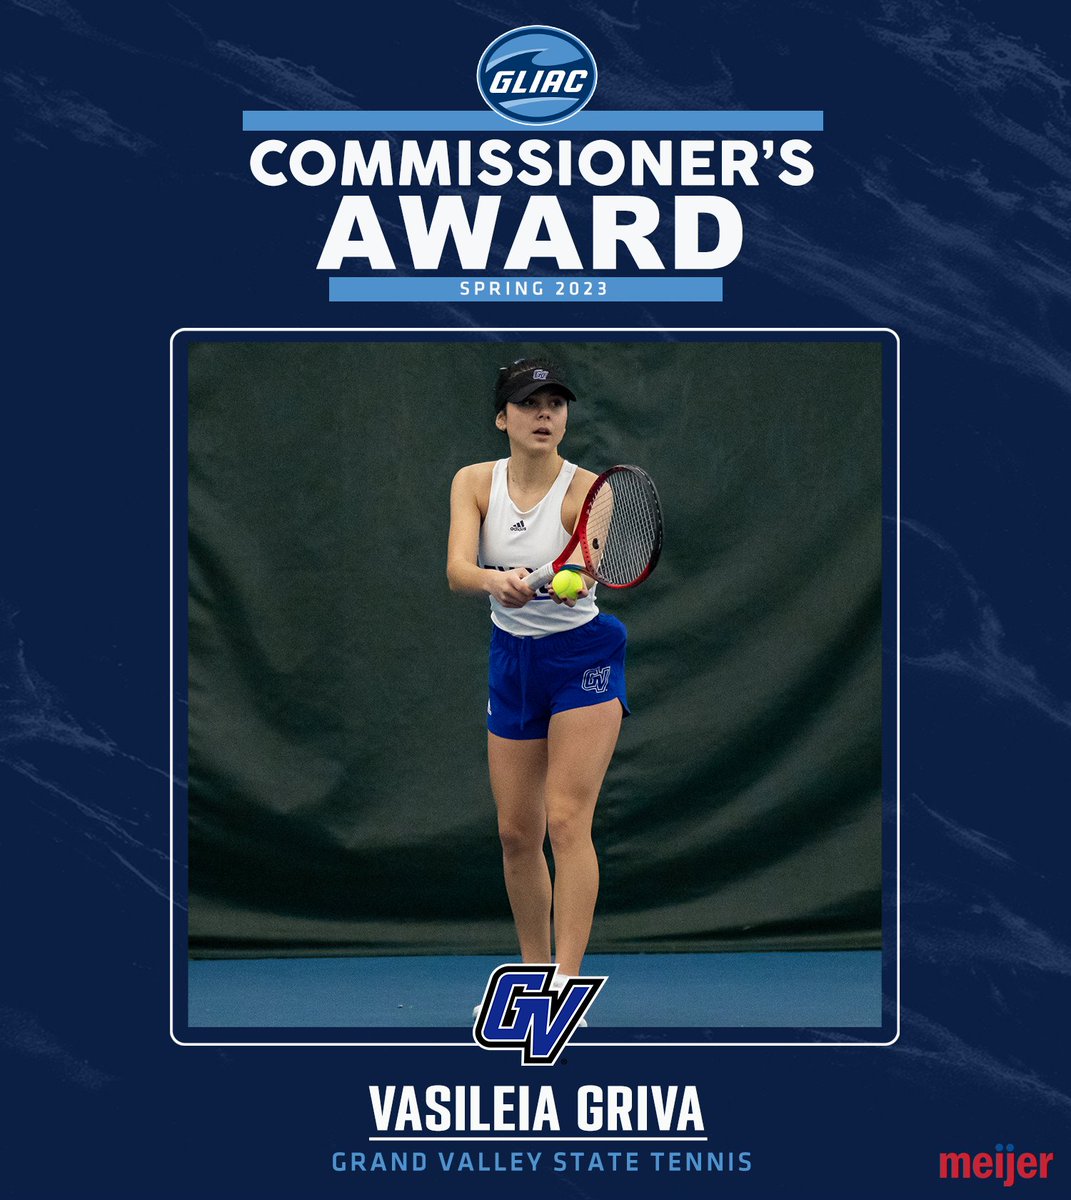 Vasileia Griva // Grand Valley State // Tennis

🔗 gliac.org/x/lwiky

#WhereChampionsCompete